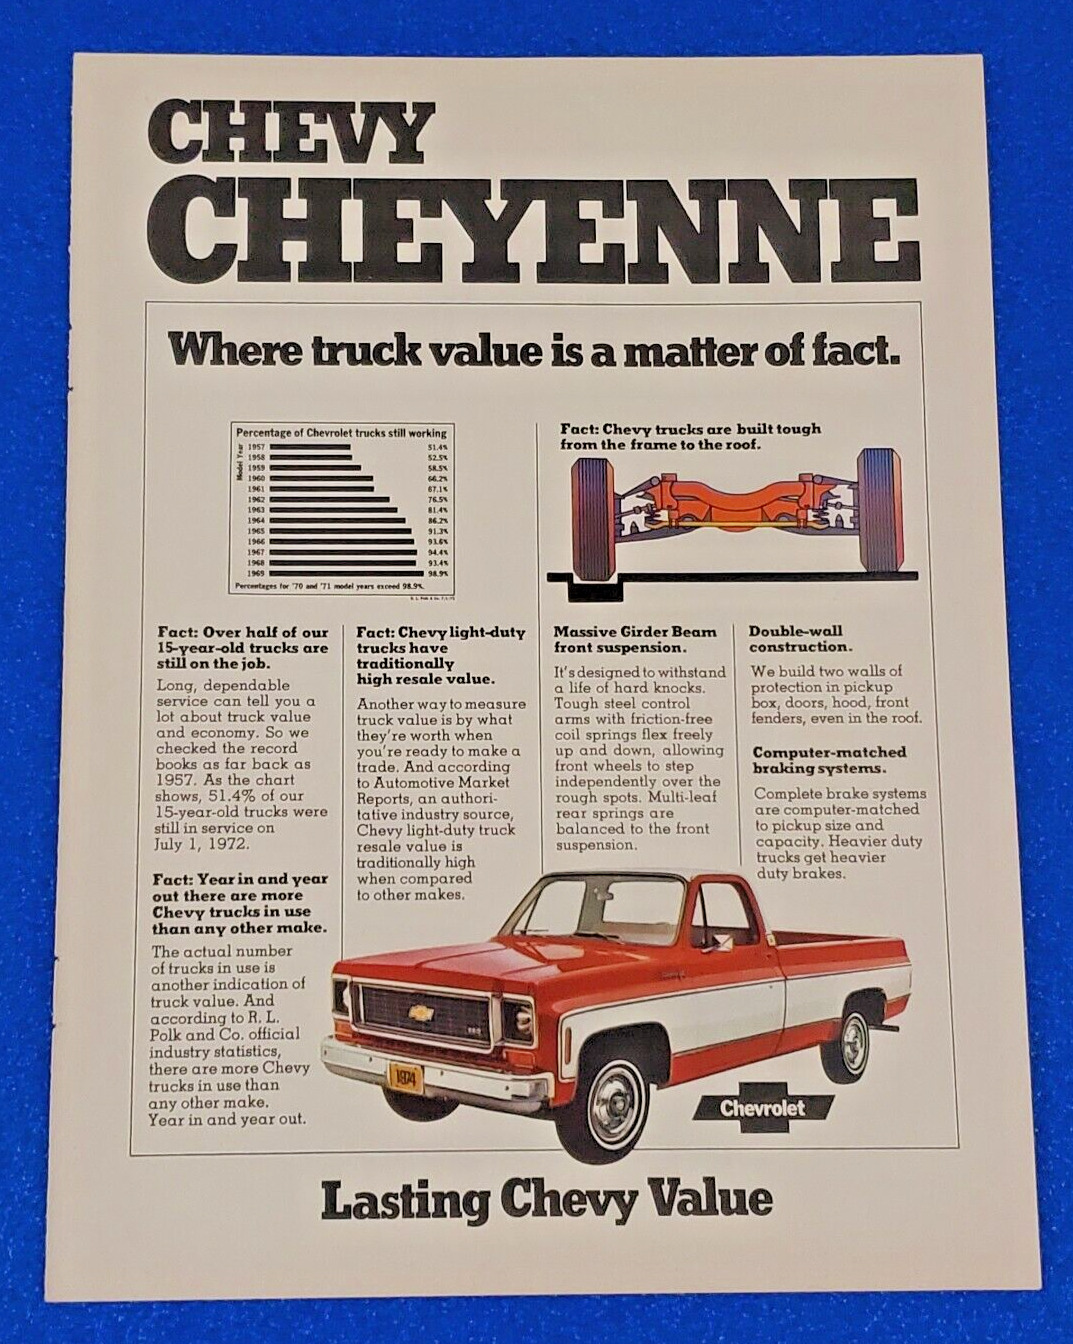 1974 CHEVY CHEYENNE PICKUP TRUCK ORIGINAL PRINT AD CLASSIC CHEVROLET WORK / FARM